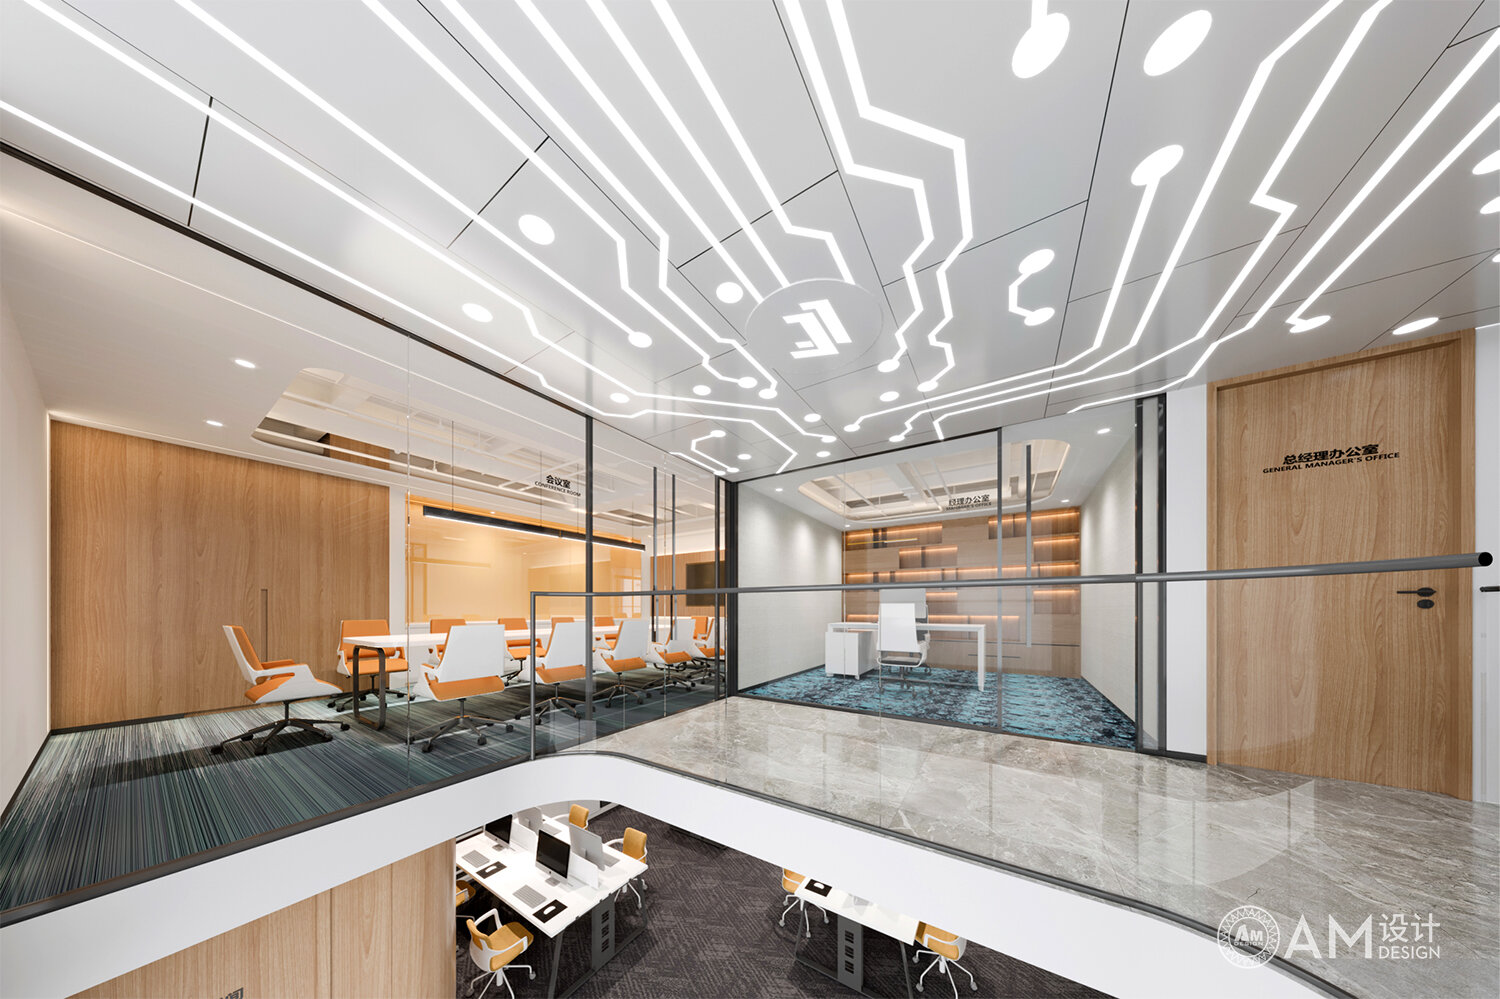 AM DESIGN| LOFT office design of Beijing Jianling Siyu Internet Company